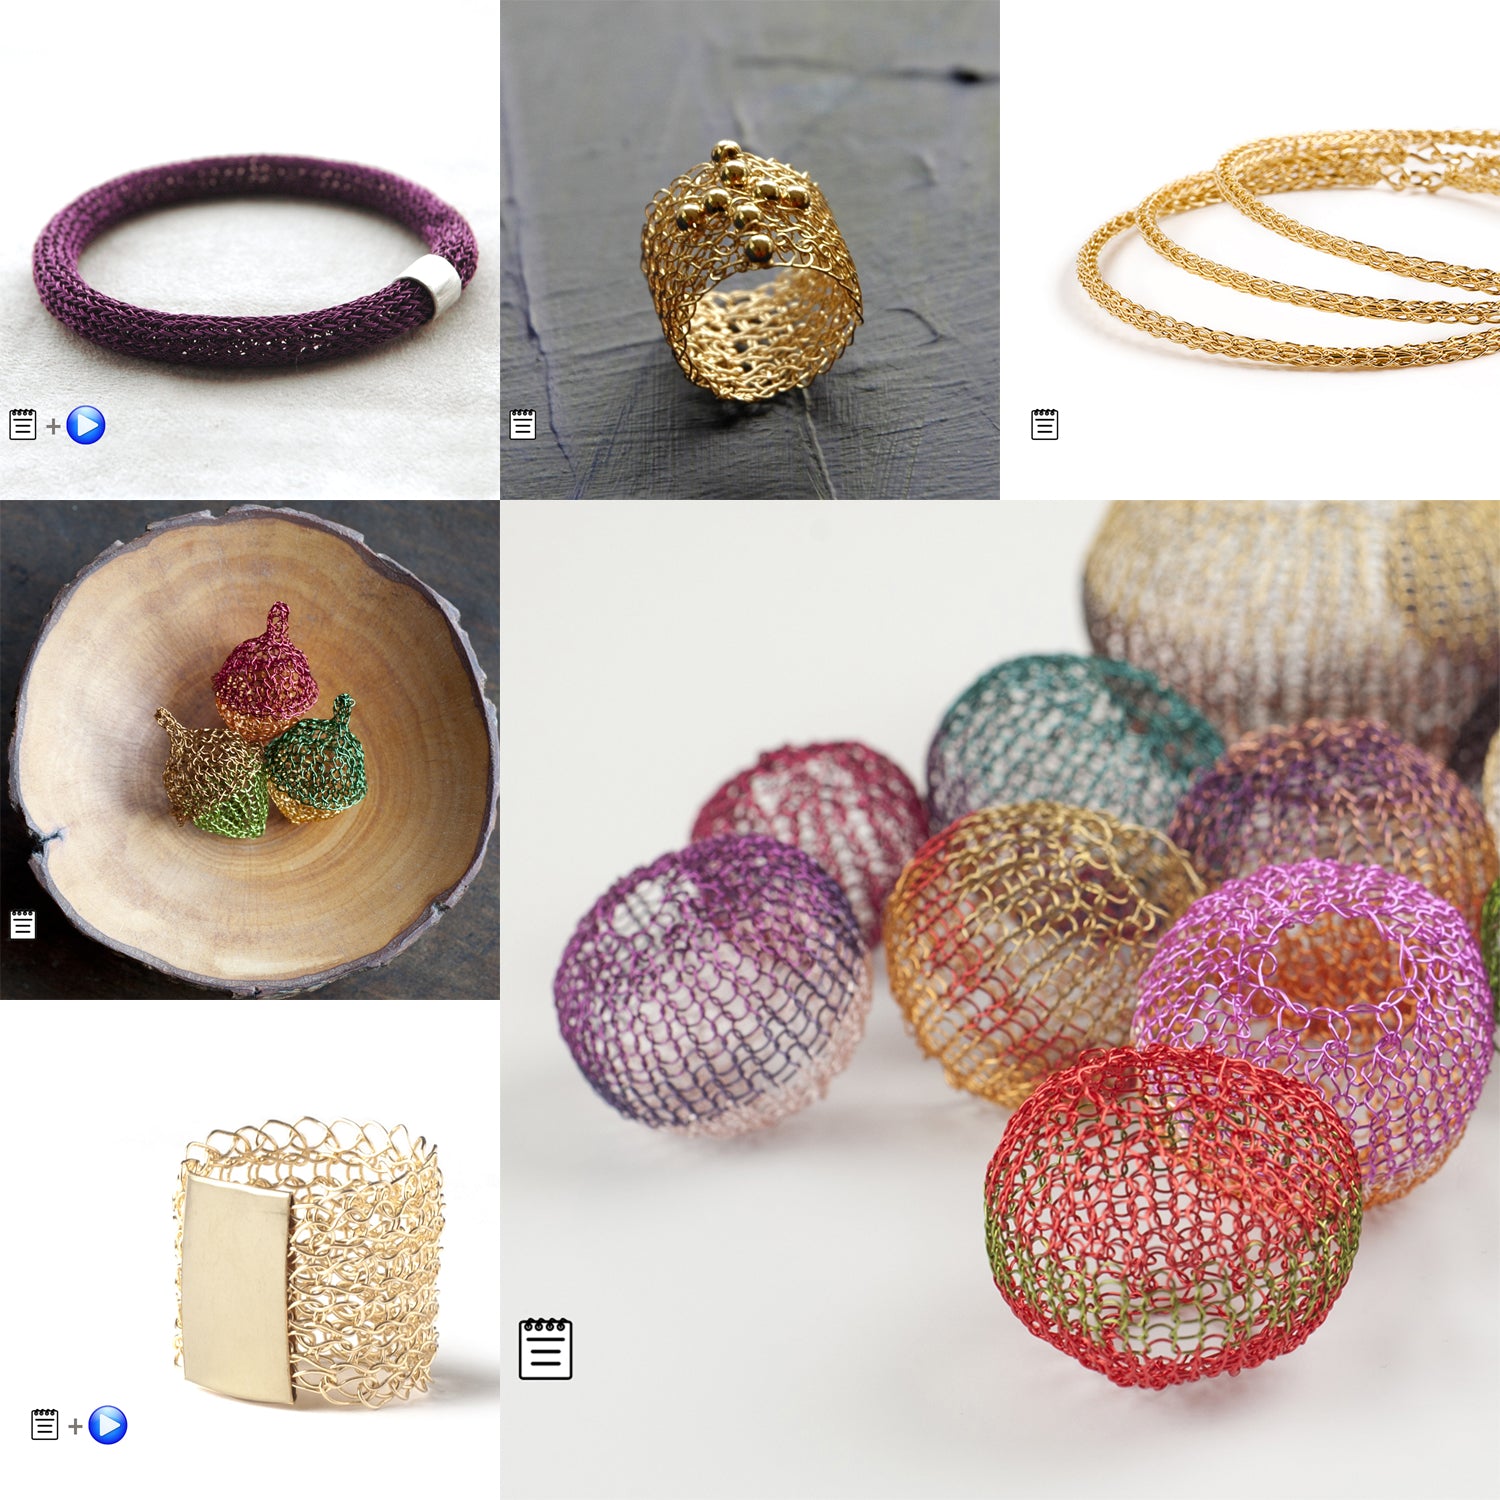 Hoop Earrings Wire Crochet Pattern - YoolaHoops Jewelry Making Tutorial PDF + Video English / Only Instructions / None